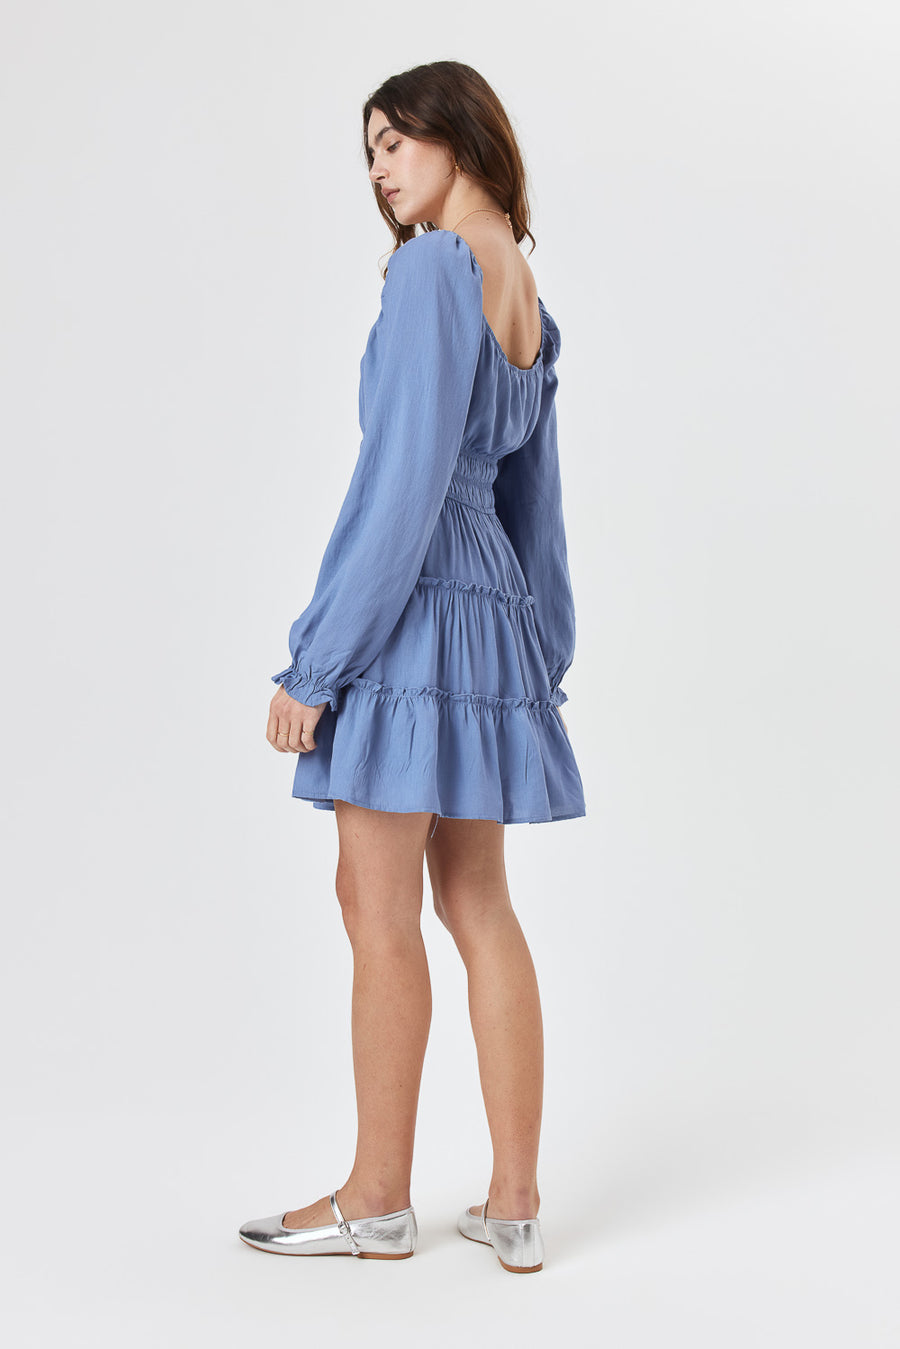 Slate Long Sleeve Ruffle Dress - Trixxi Clothing